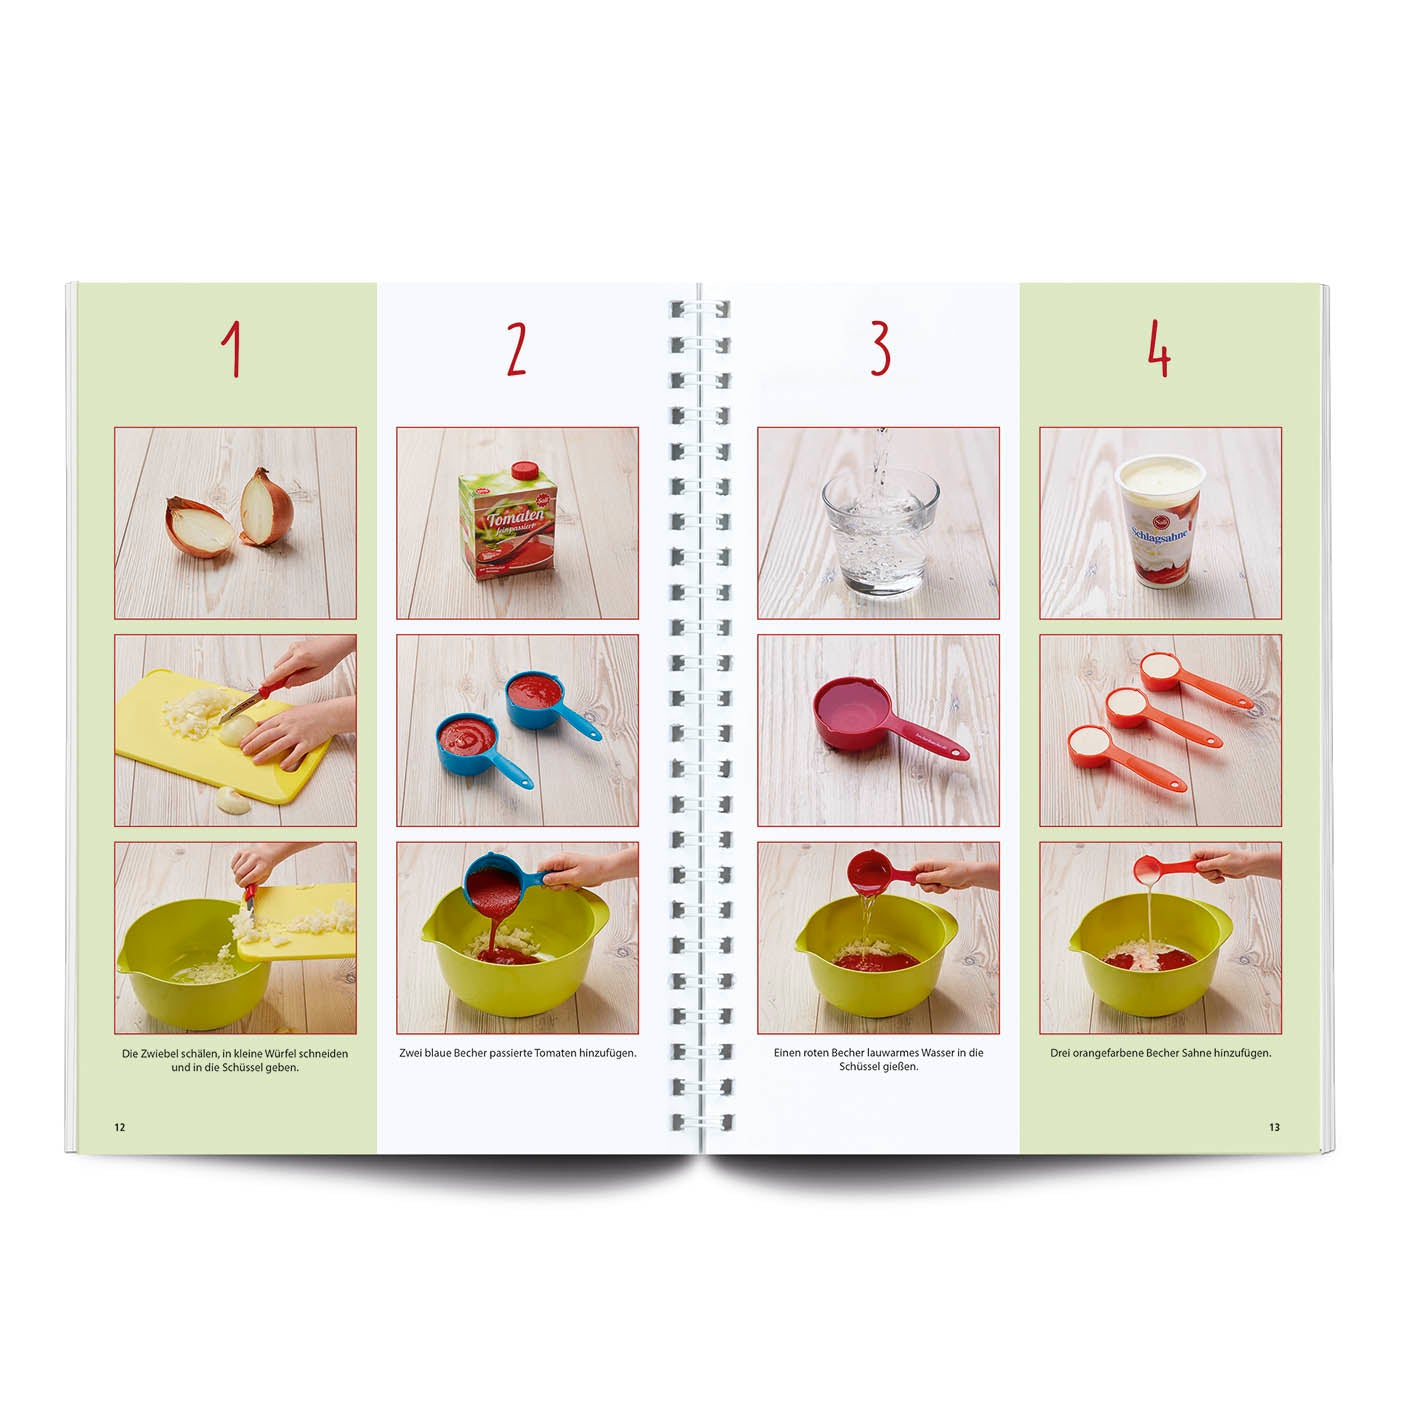 Rezeptbuch (Ergänzungsexemplar ohne Messbecher) - Band 5 - Ofen-Rezepte für die ganze Familie (DIN-A5)